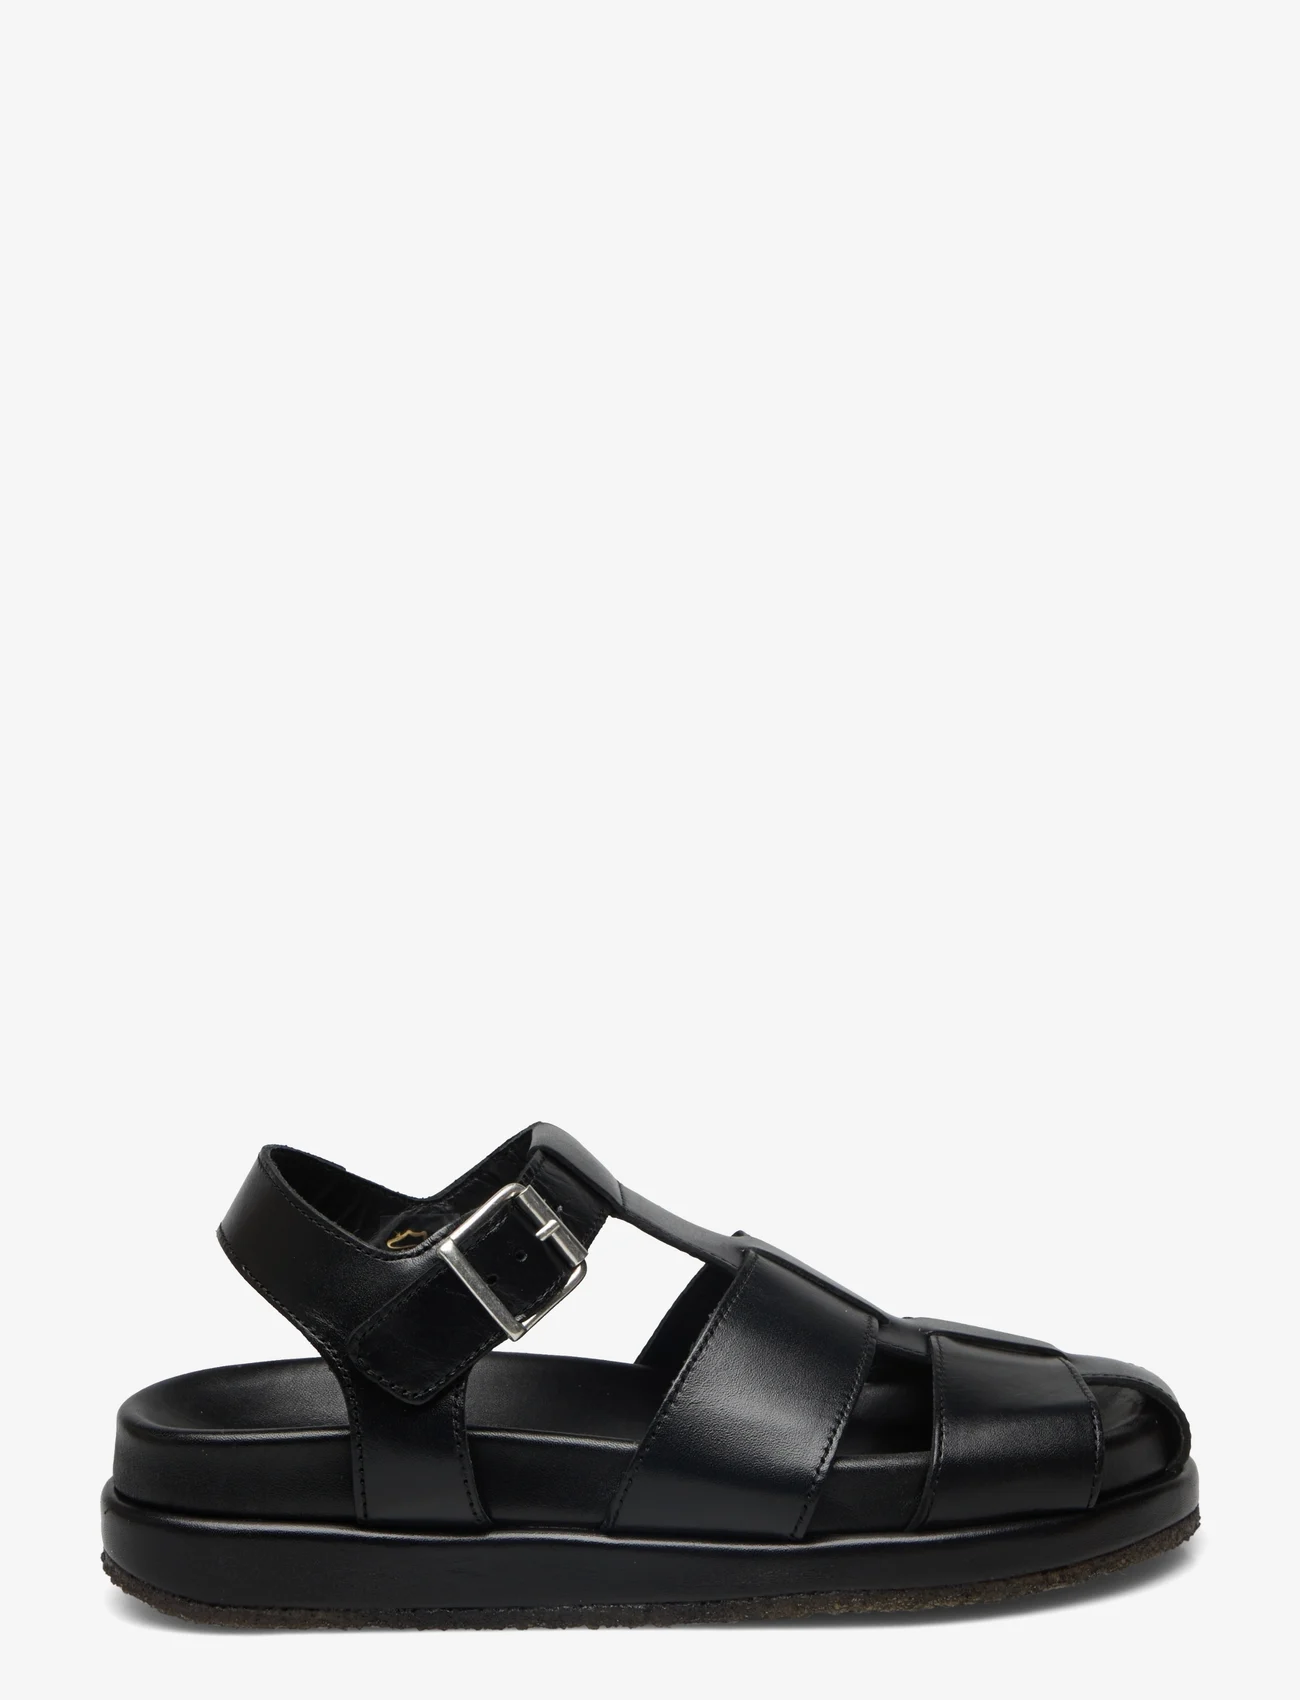 ANGULUS - Sandals - flat - open toe - op - platte sandalen - 1604/1785 black - 1